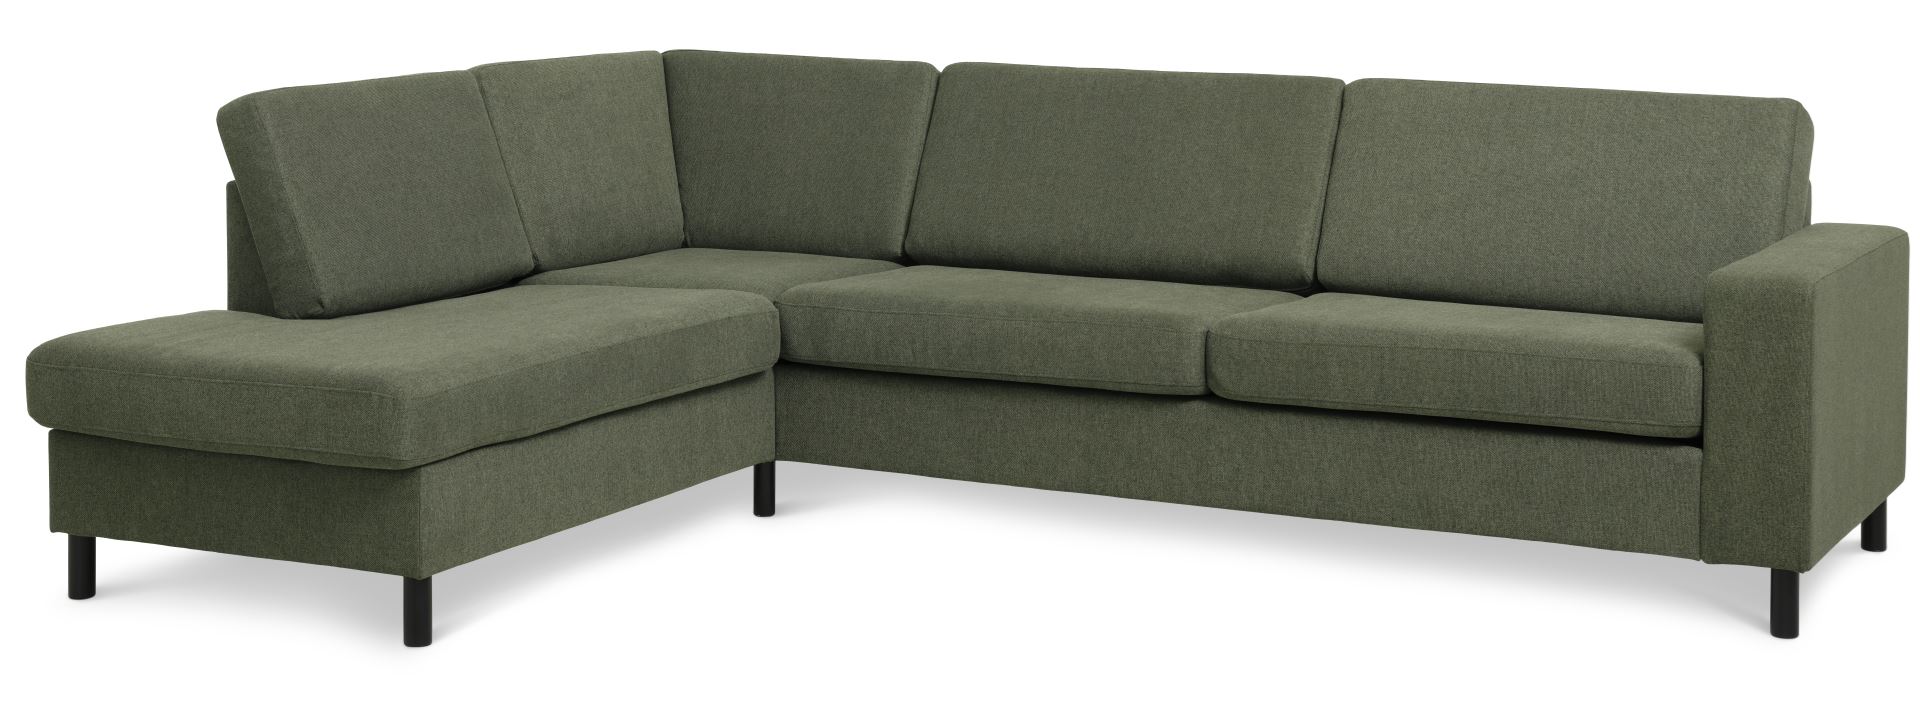 Pan set 2 OE left sofa med chaiselong - vinter mosgrøn polyester stof og sort træ